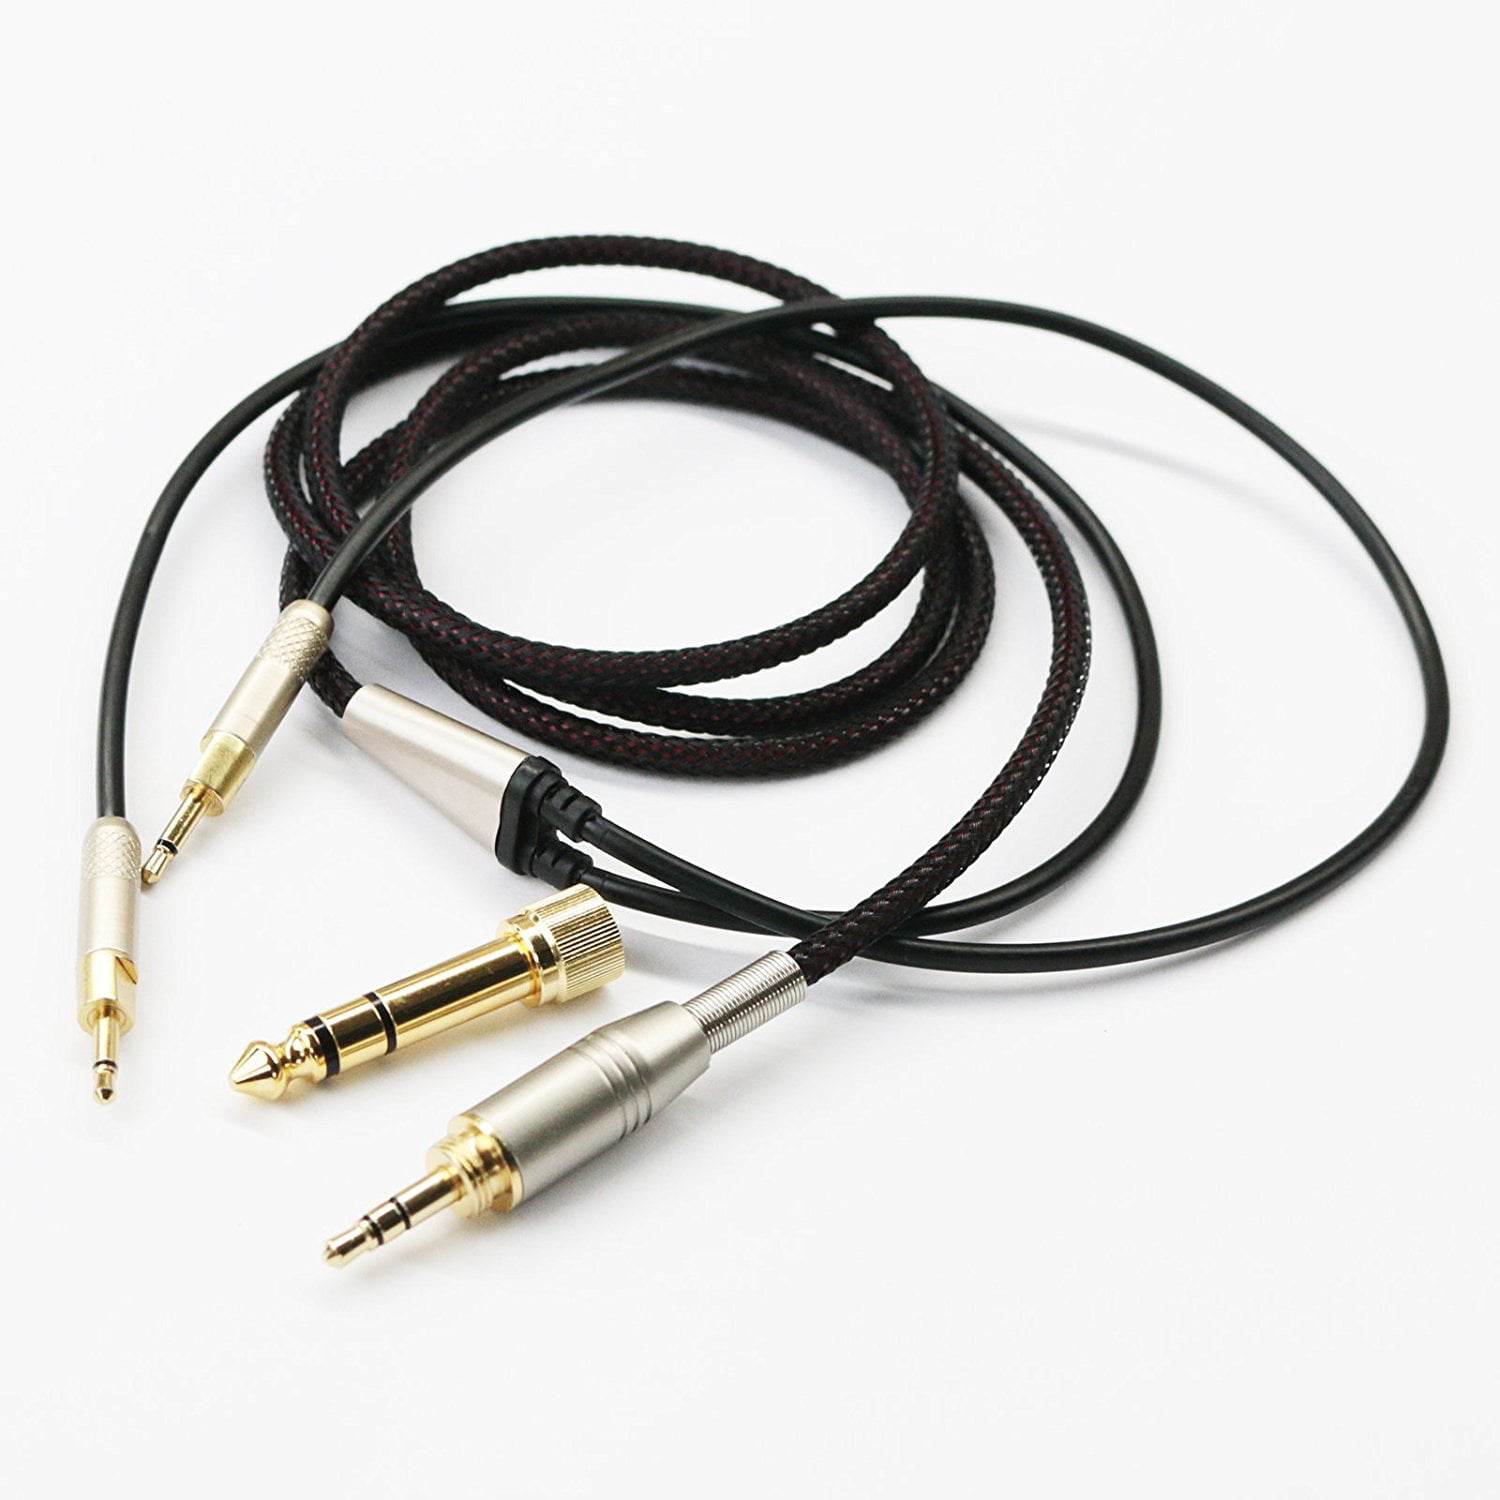 Neomusicia Replacement Upgrade Audio Hifi Cable For Sennheiser Hd700 Hd 700 Headphones 1cm 4ft Black Walmart Com Walmart Com